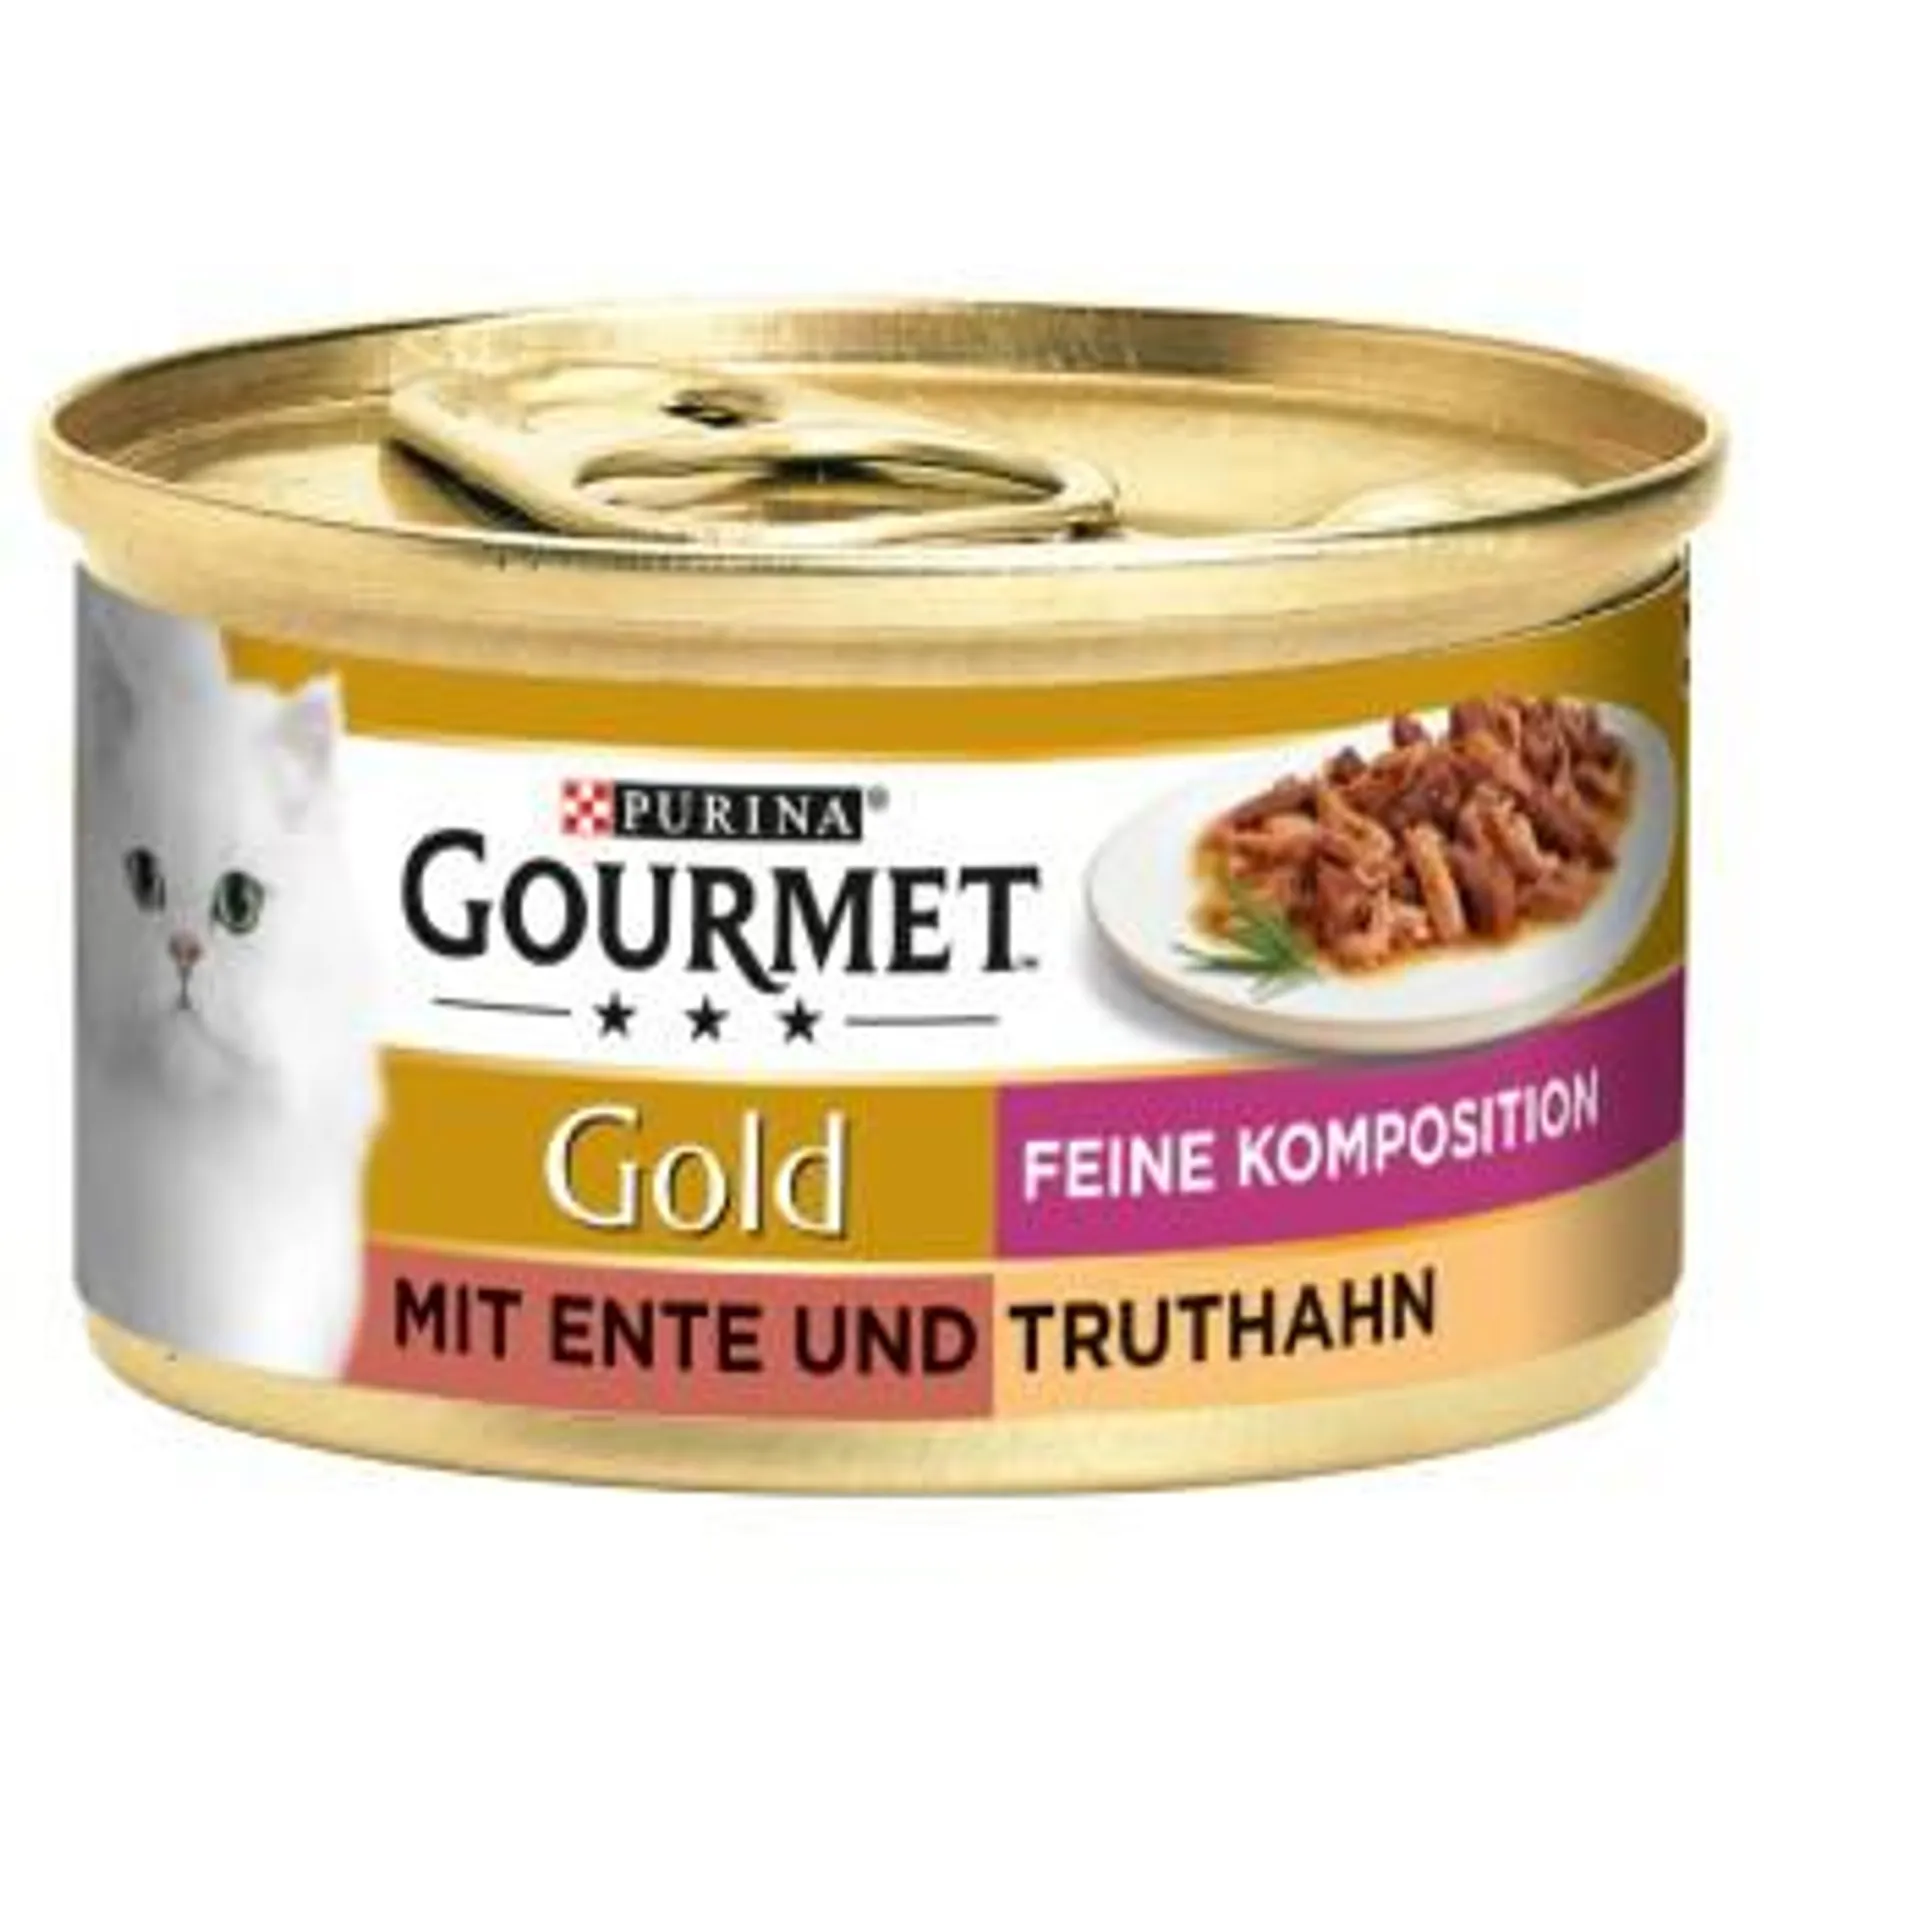 GOURMET Gold Feine Komposition 12x85g Ente & Truthahn